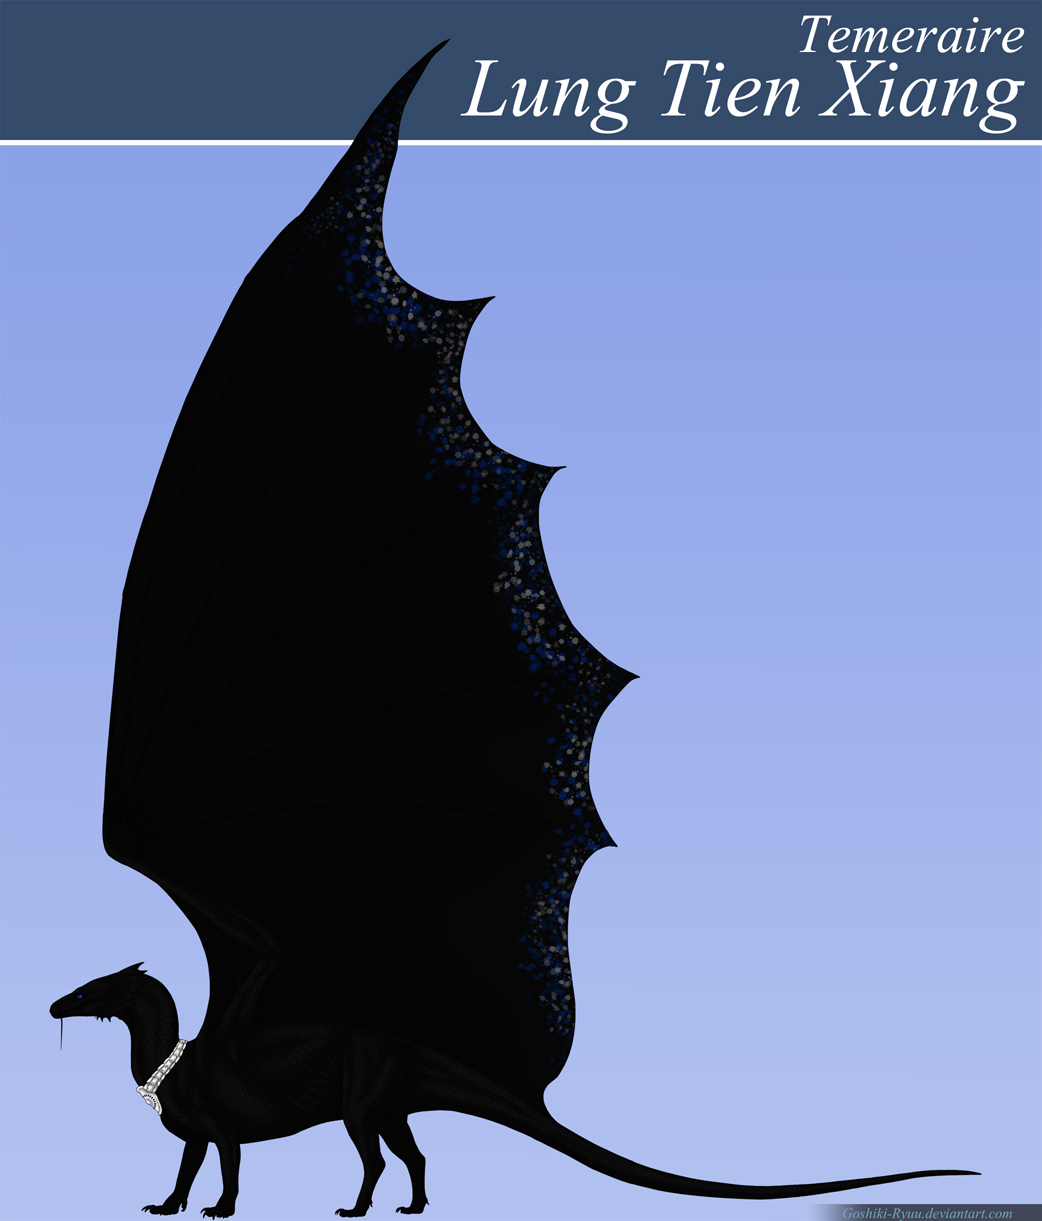 Lung Tien Xiang-Temeraire.jpg